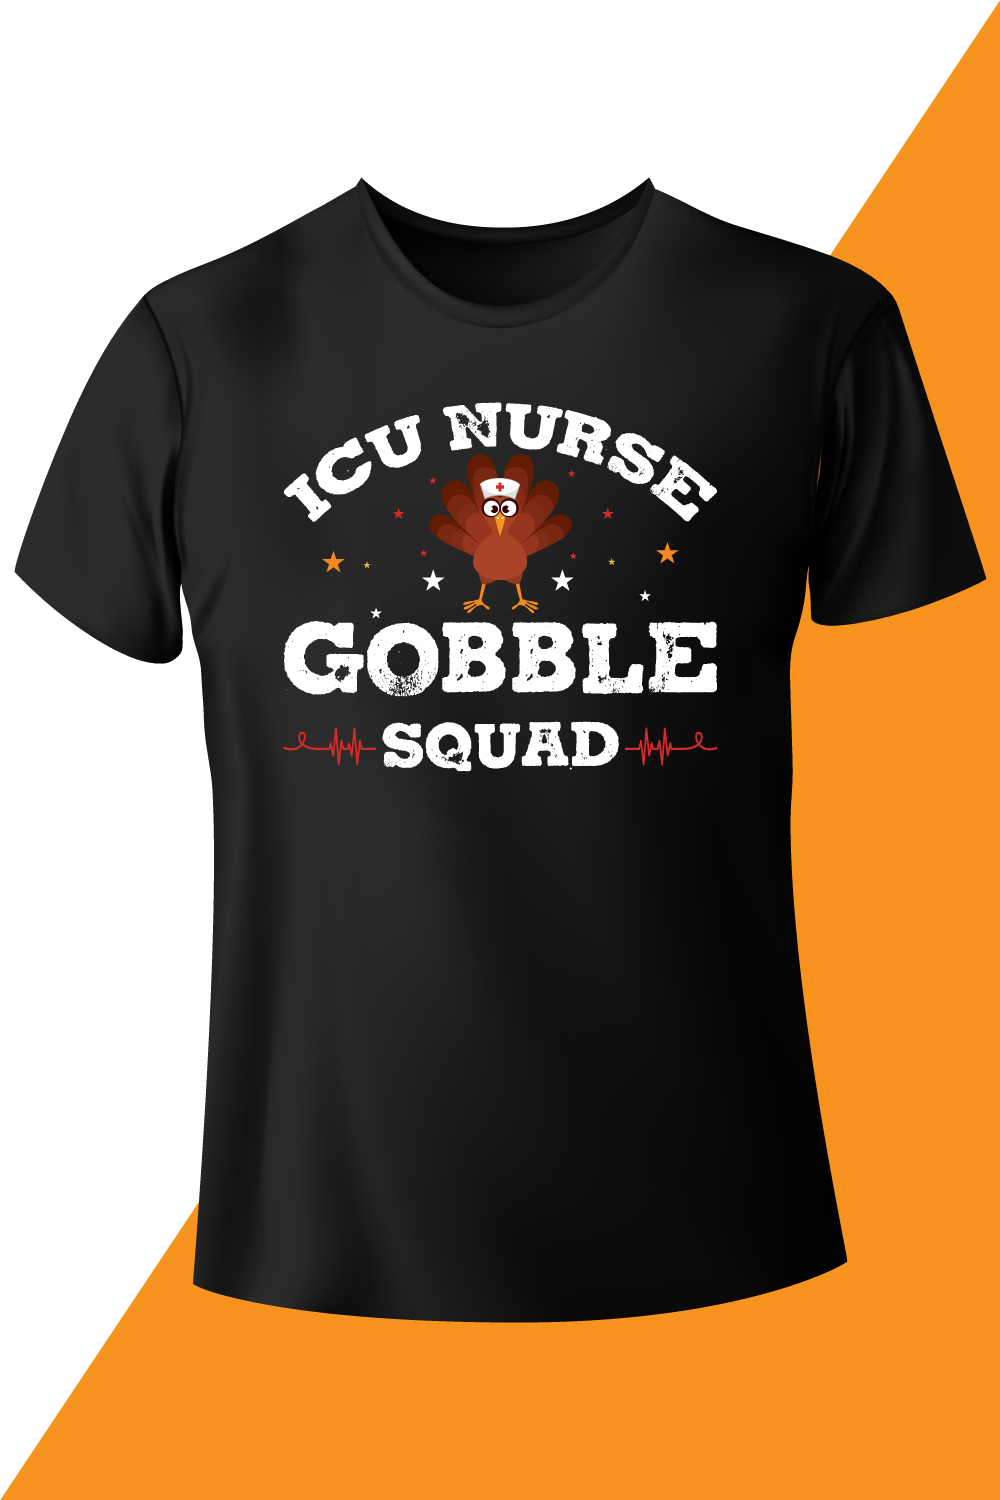 Image of a black t-shirt with a colorful inscription Icu nurse gobble squad.